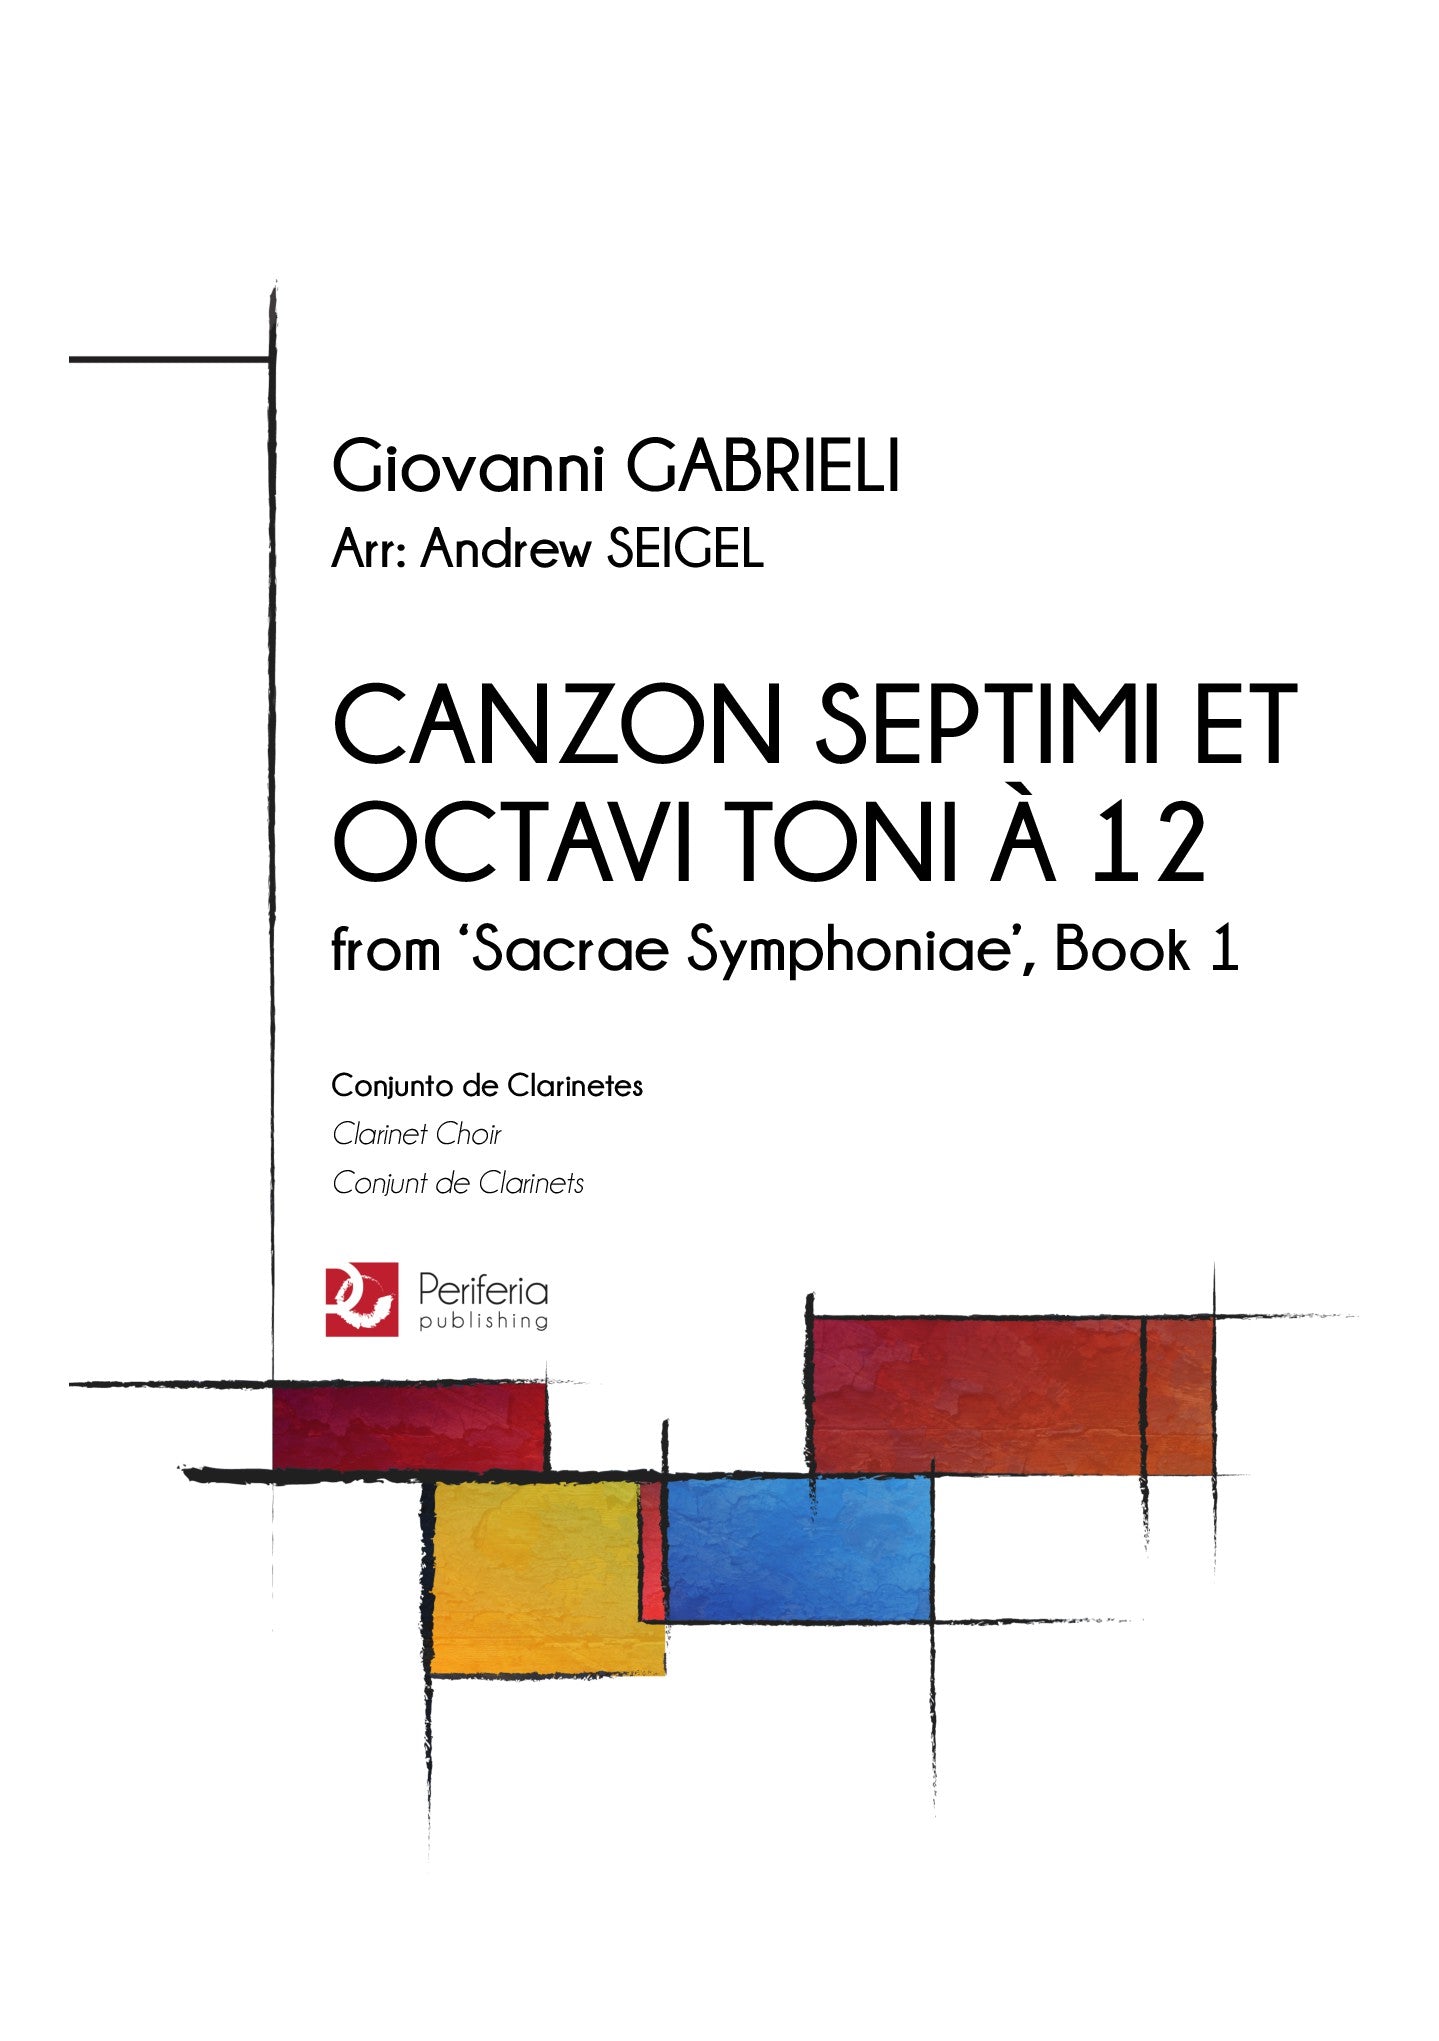 Gabrieli (arr. Andrew Seigel) - Canzon Septimi et Octavi Toni a 12 from 'Sacrae Symphoniae', Book 1